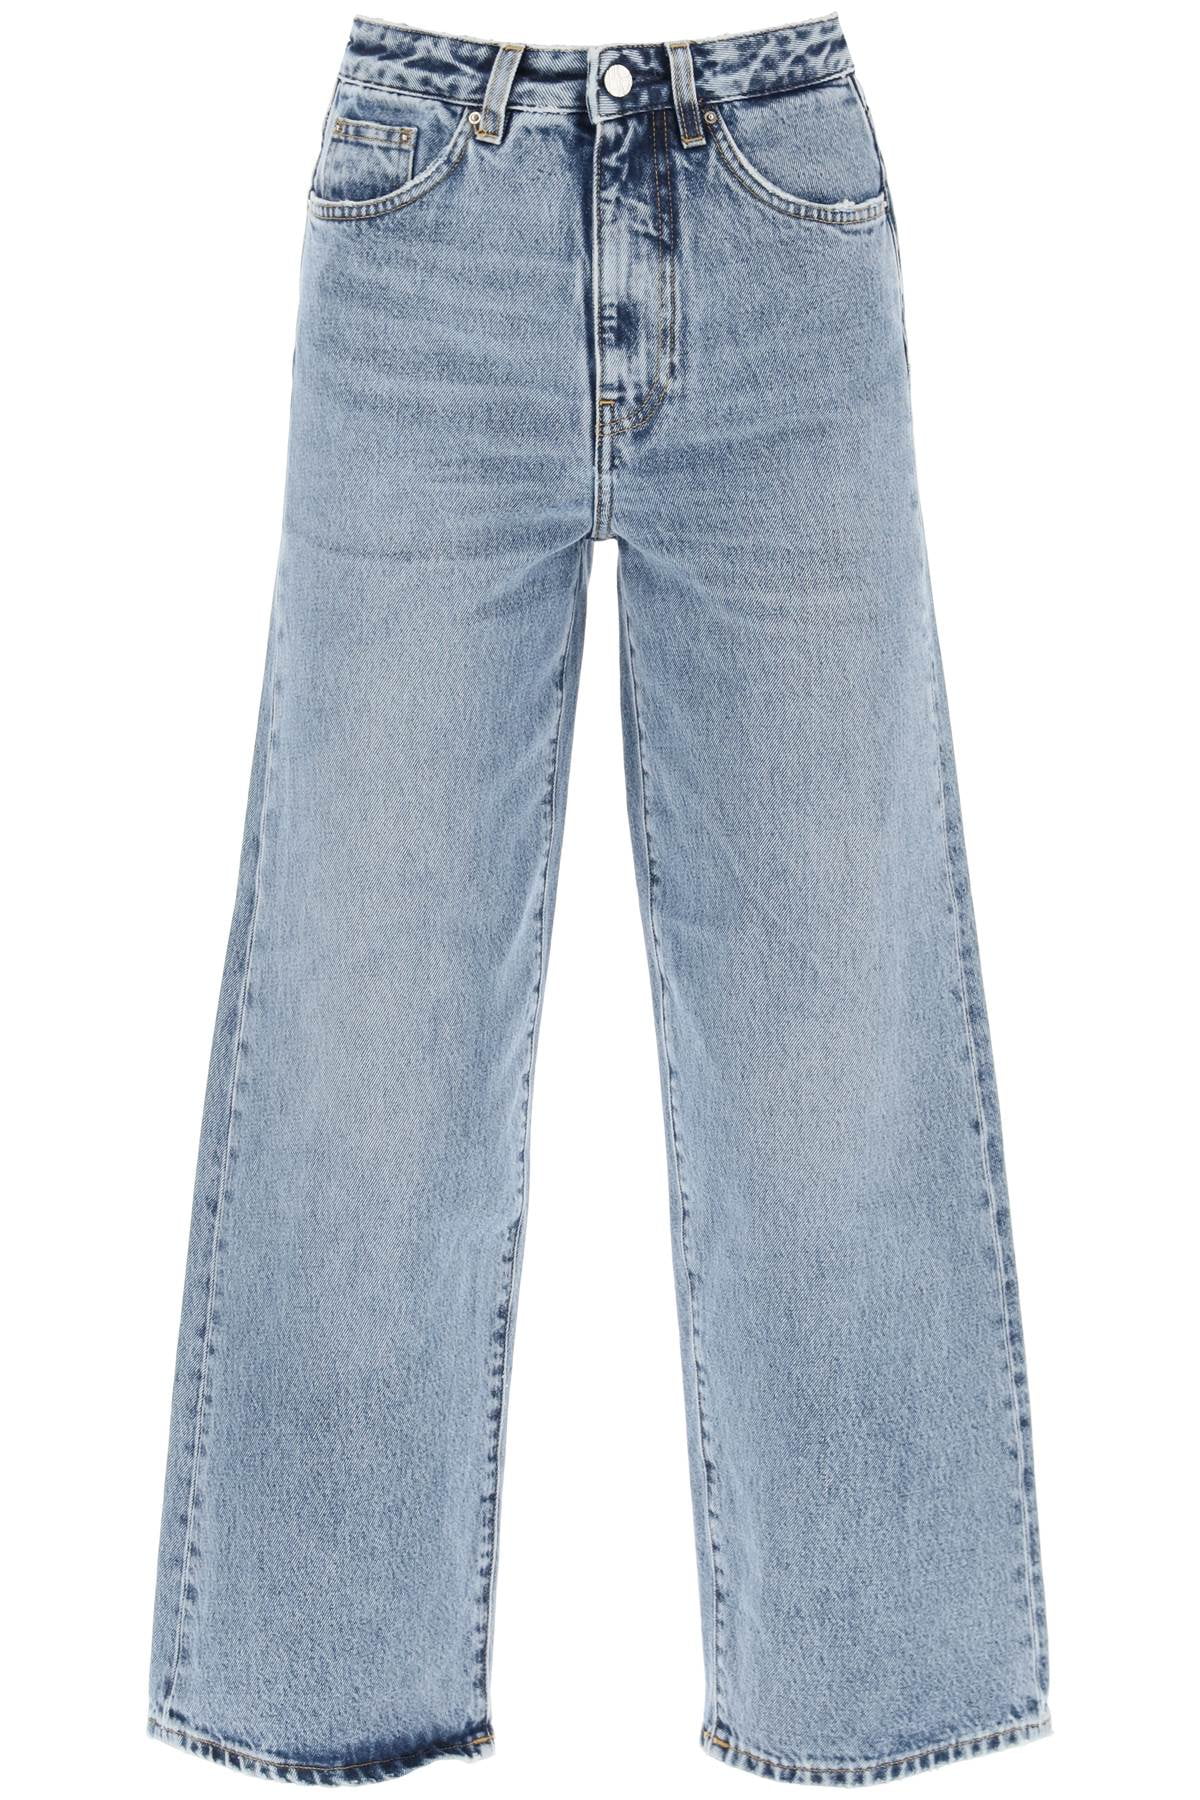 Toteme Cropped Flare Jeans Women - Walmart.com